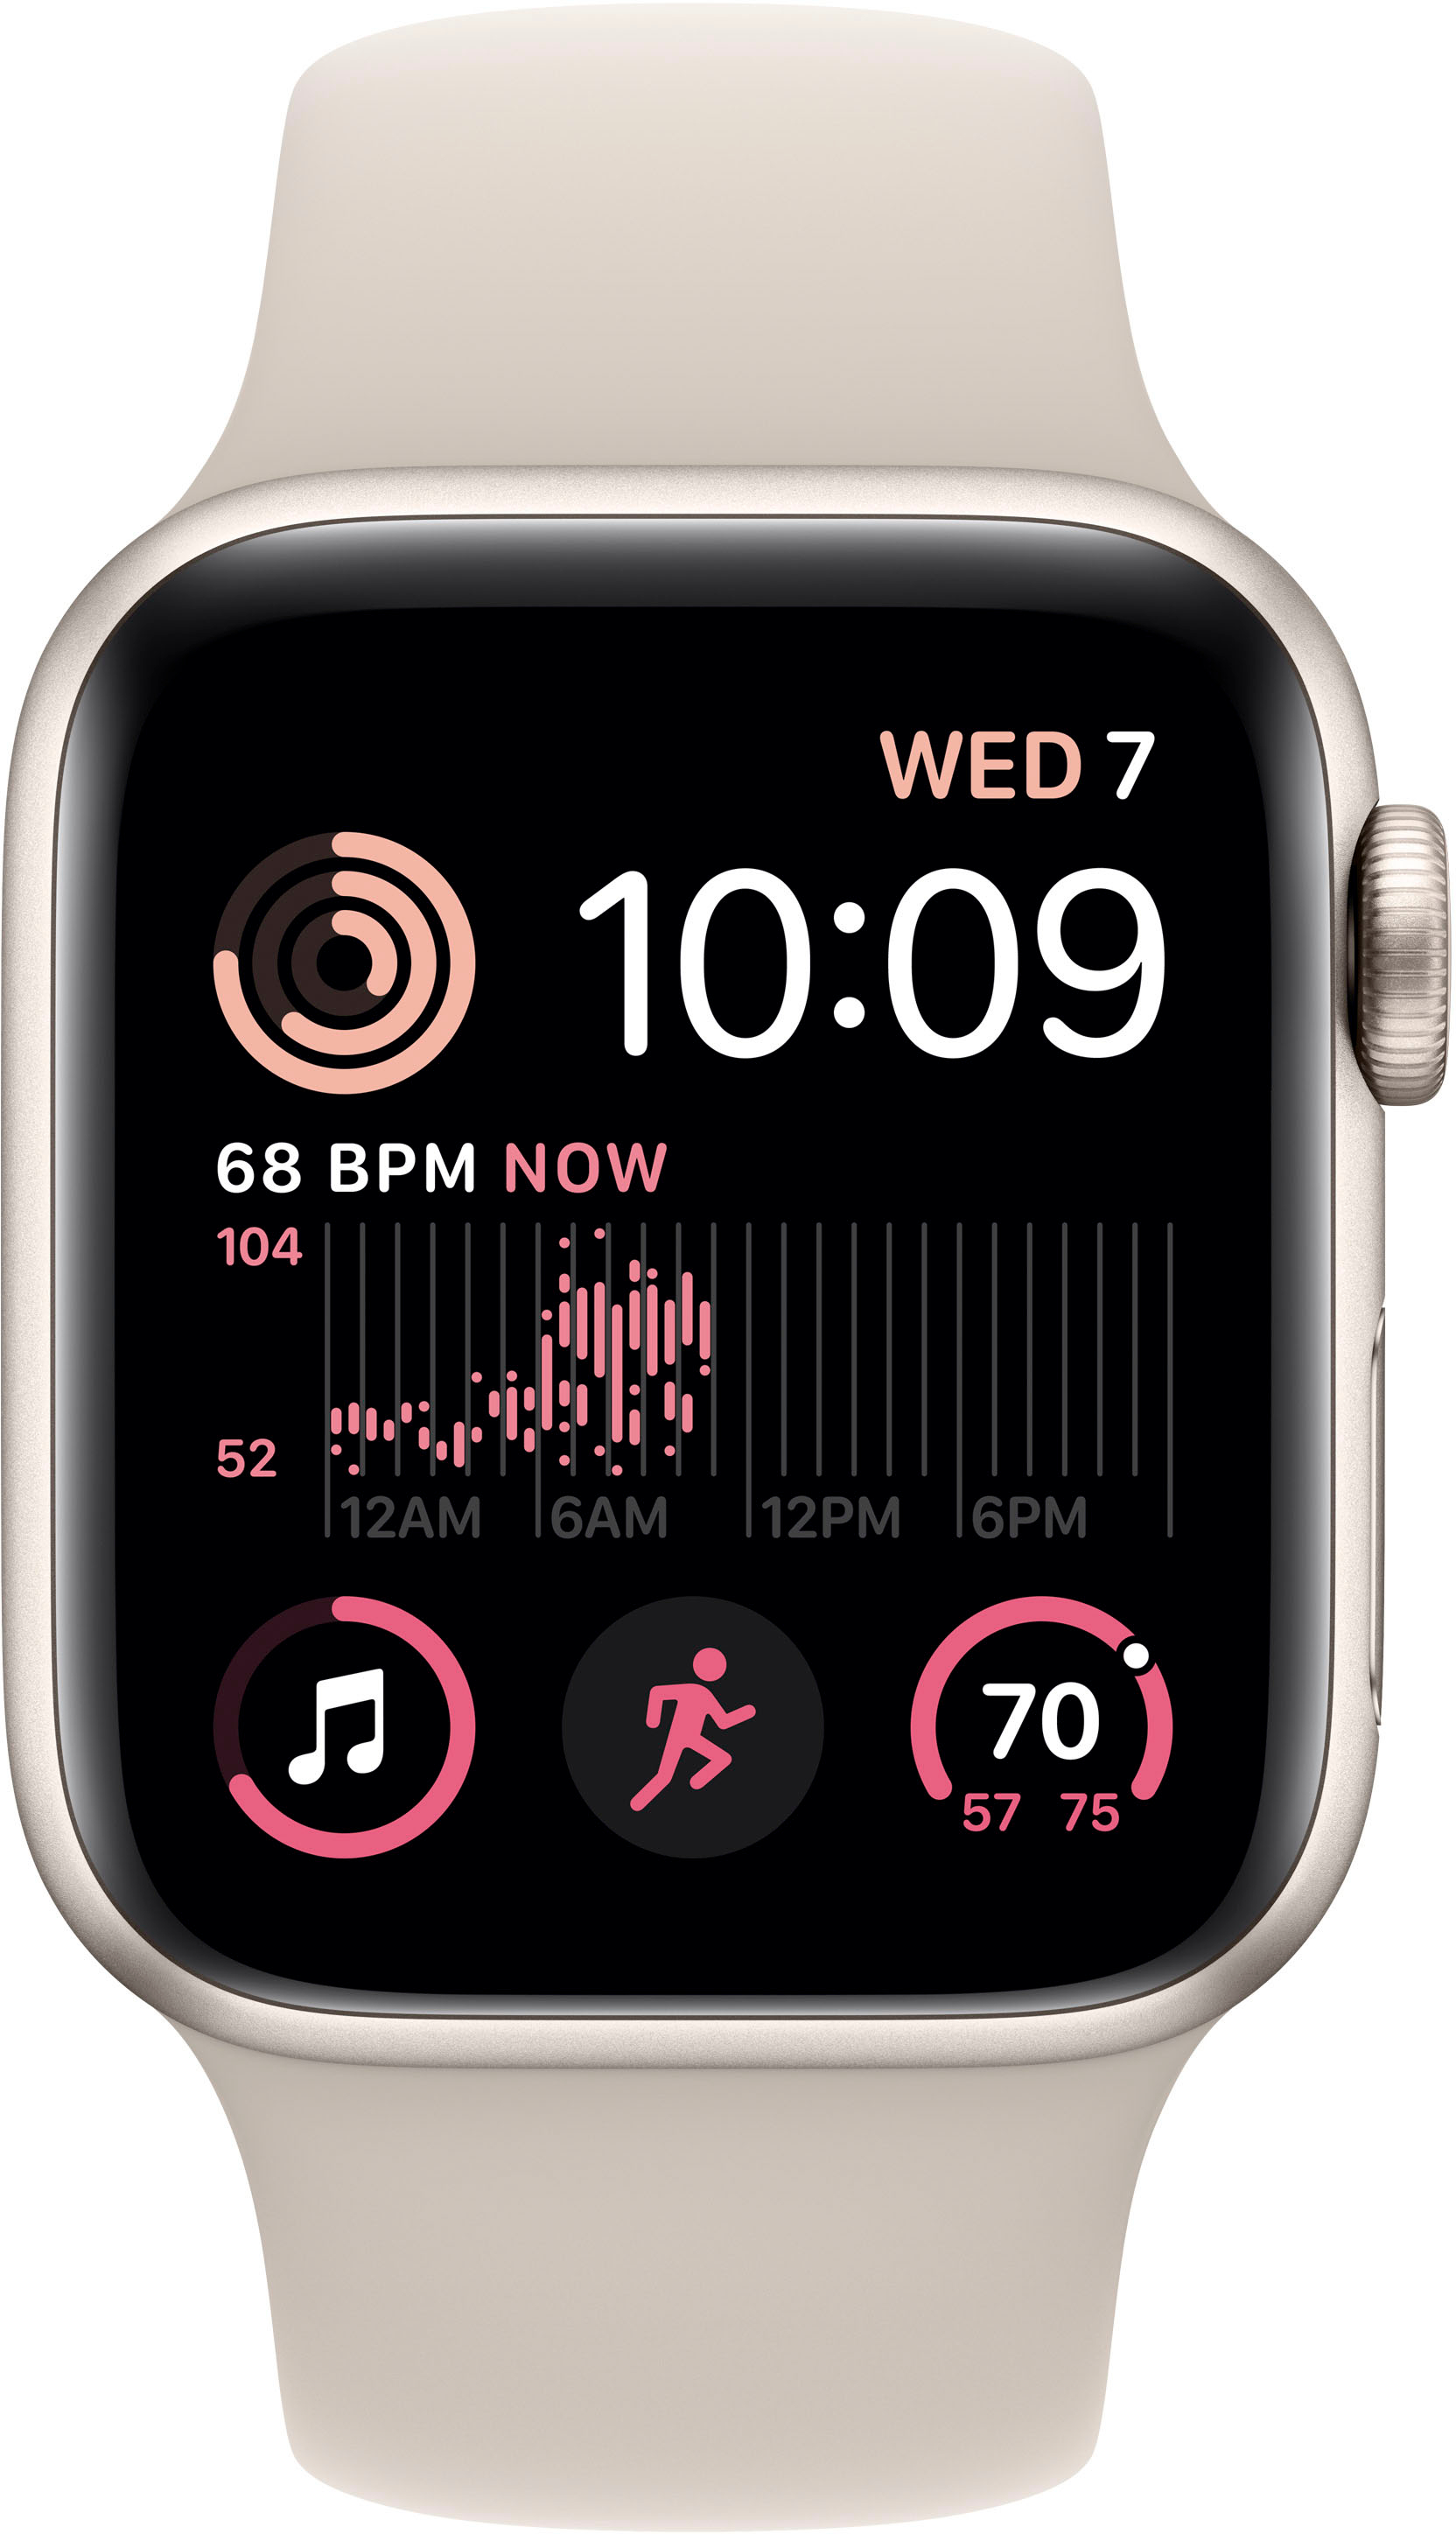 Apple Watch Series 3 Review - PhoneArena